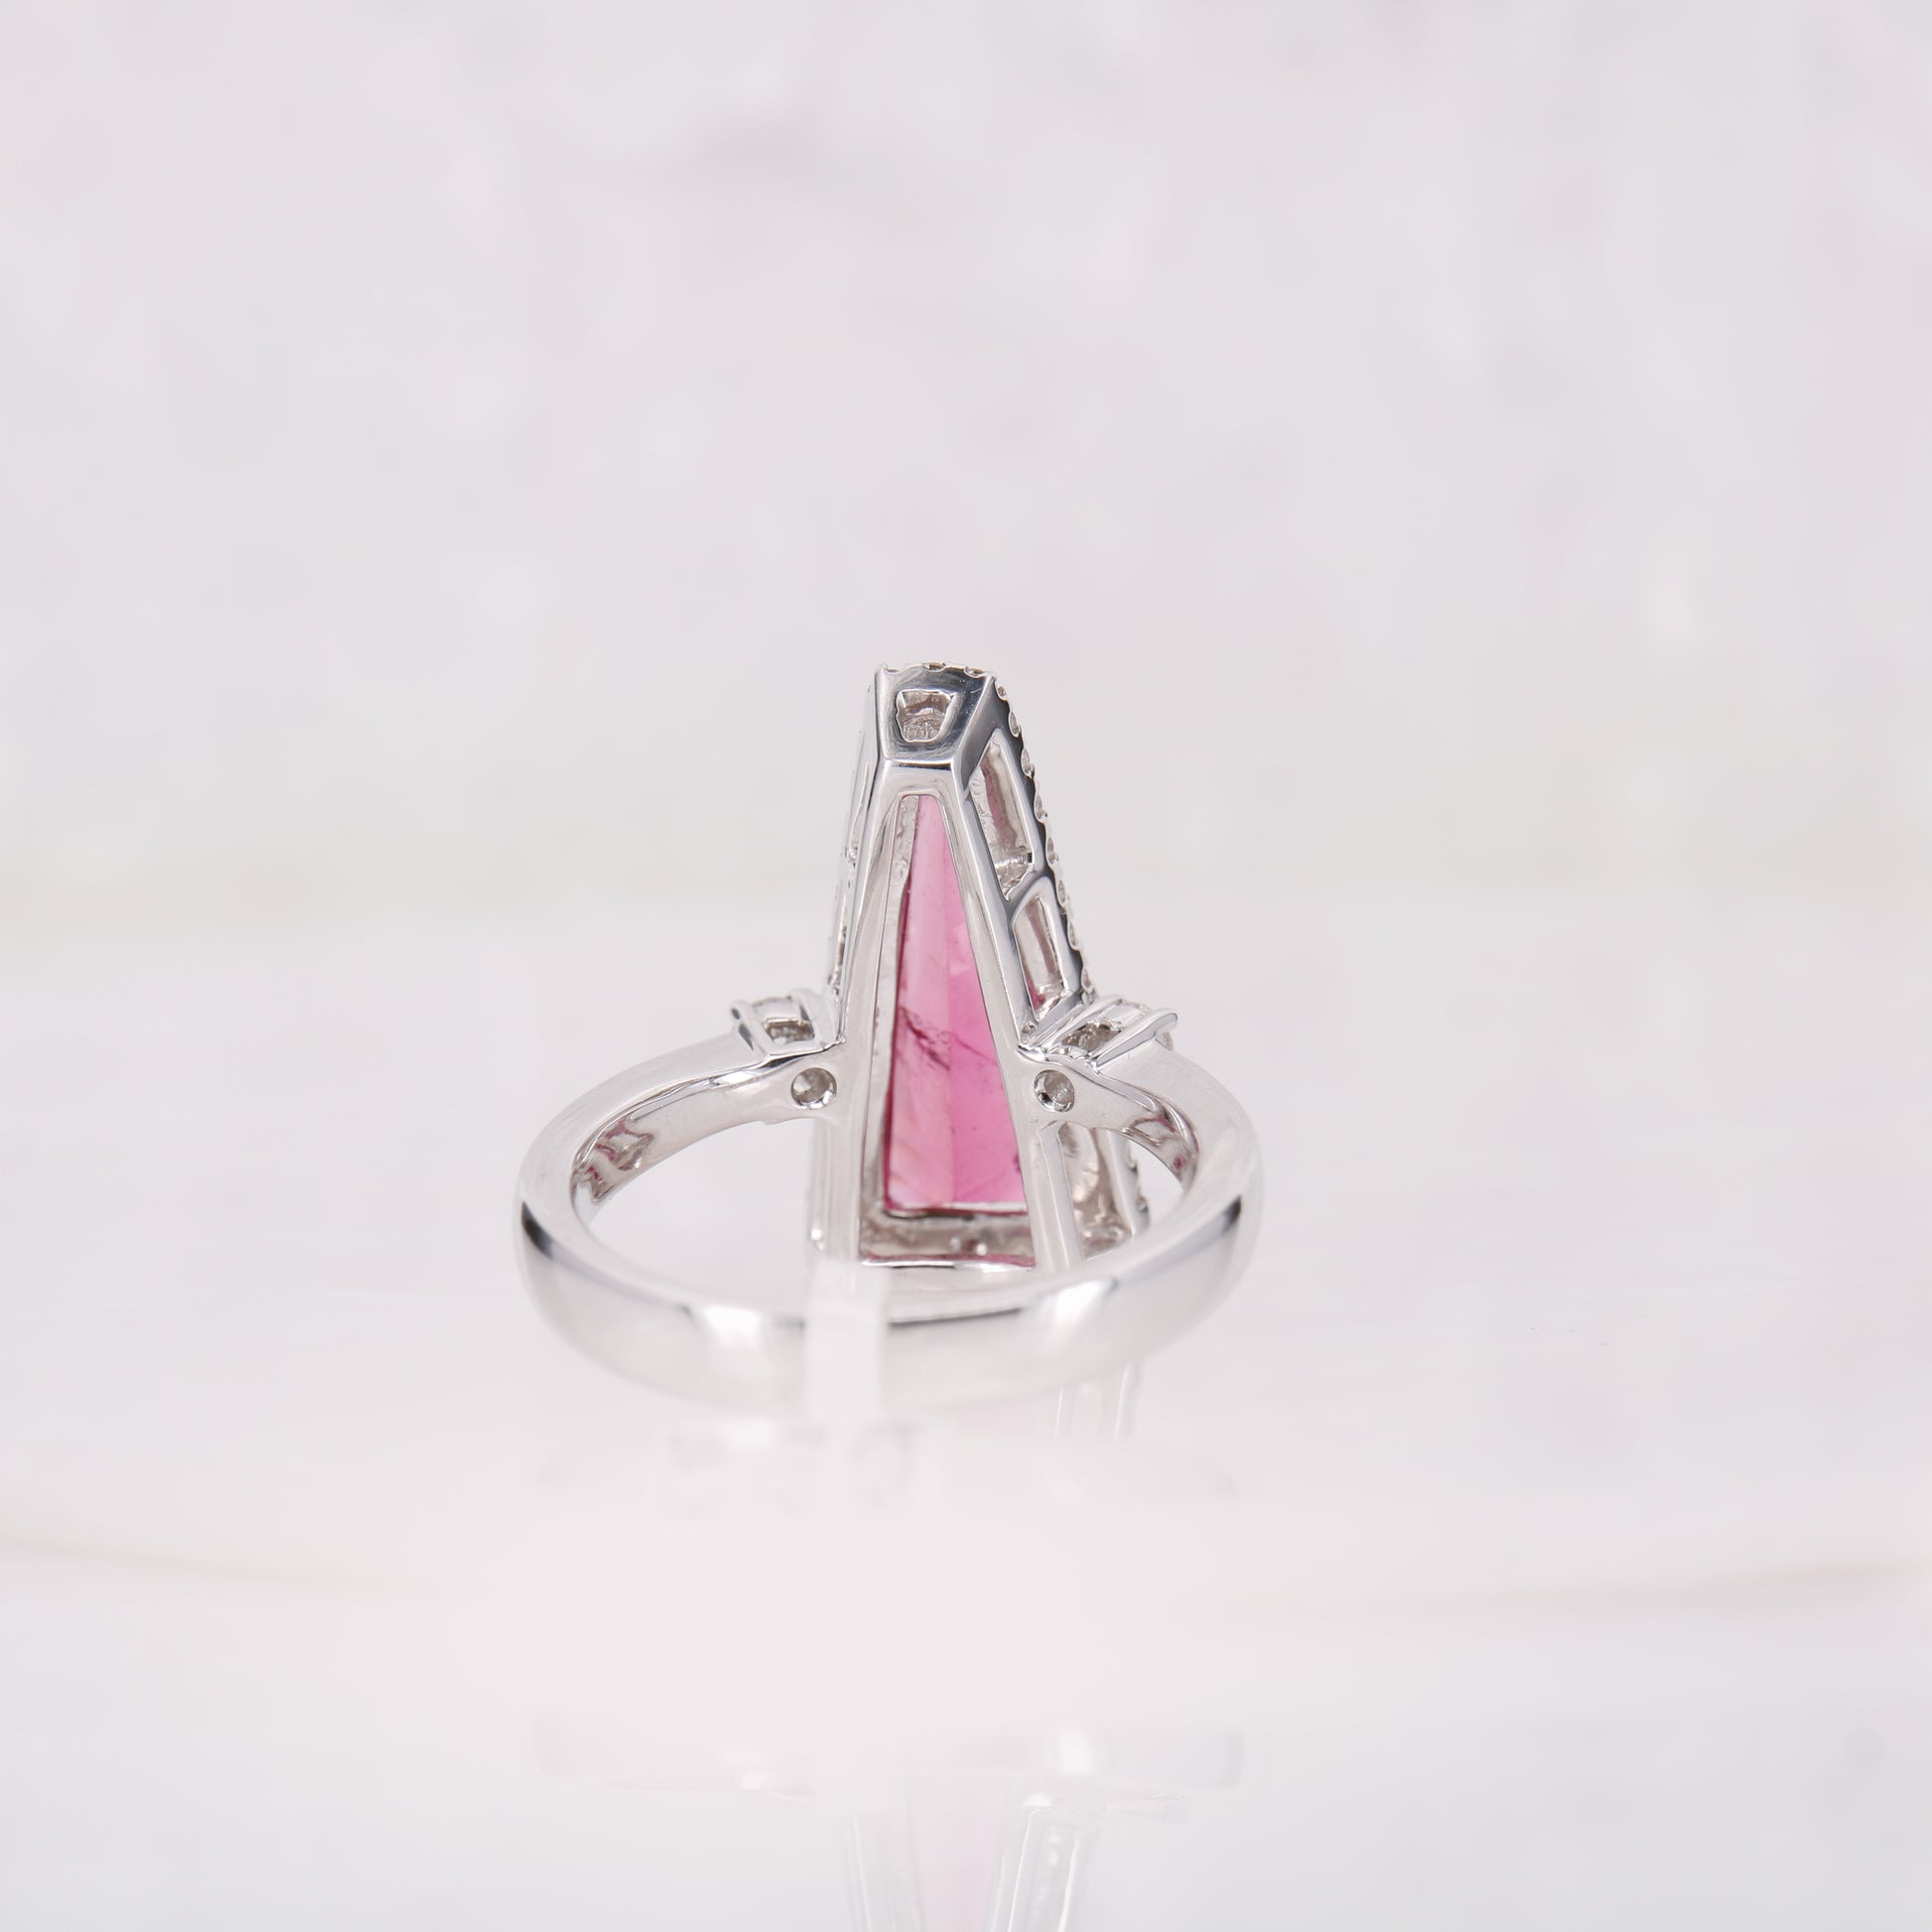 18ct white gold pink tourmaline and diamond ring. Faceted bright pink tourmaline and diamond ring.